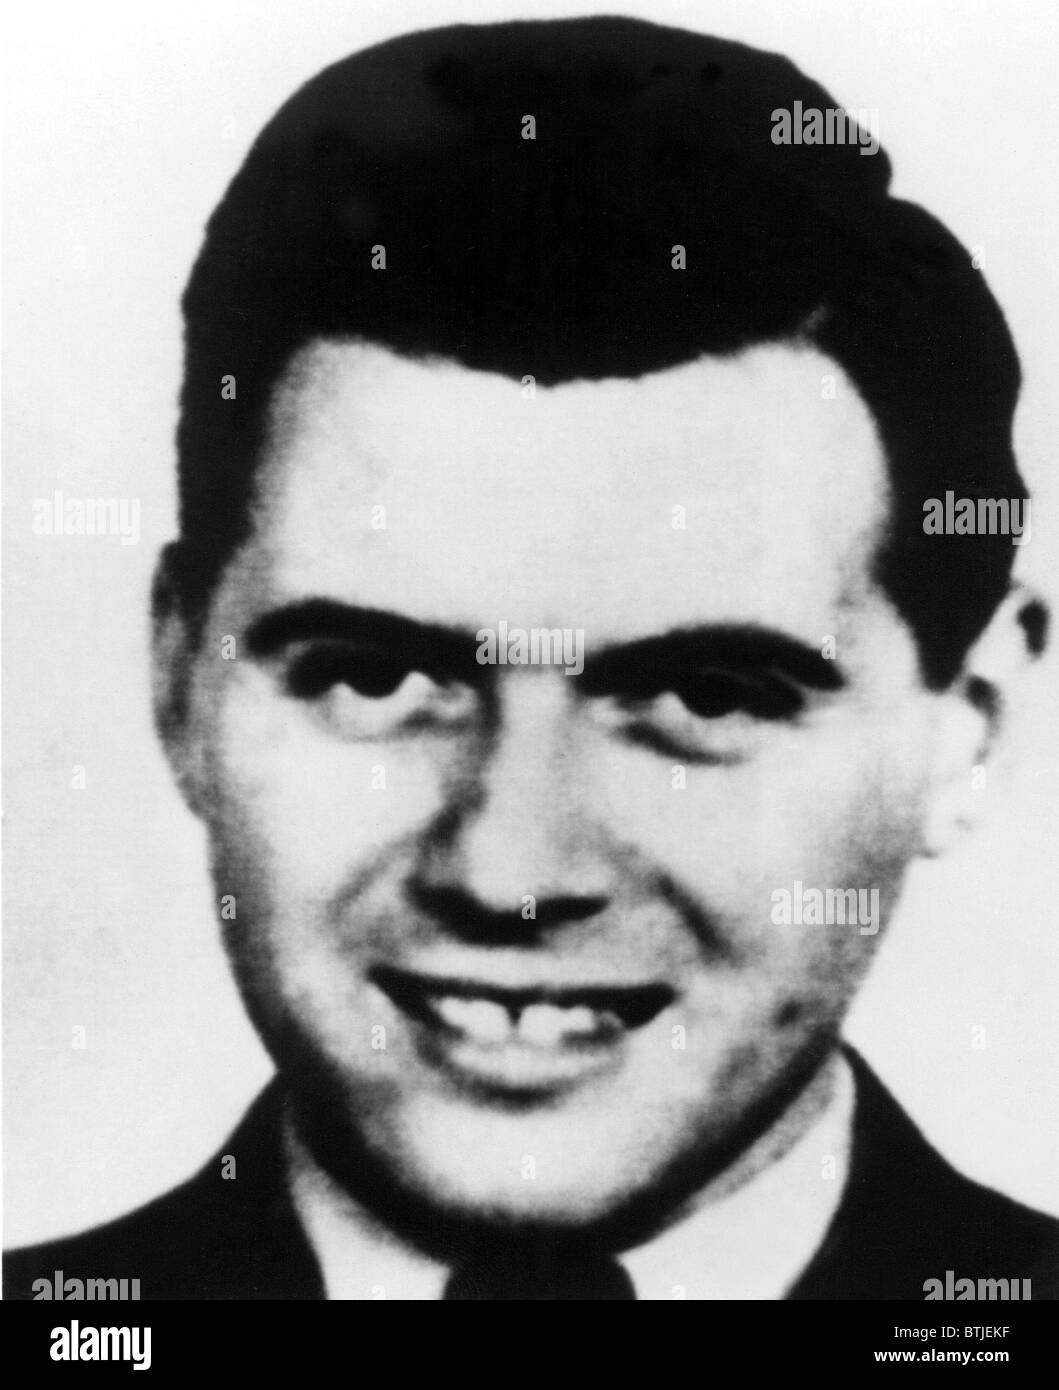 JOSEF MENGELE, Nazi war criminal. Stock Photo